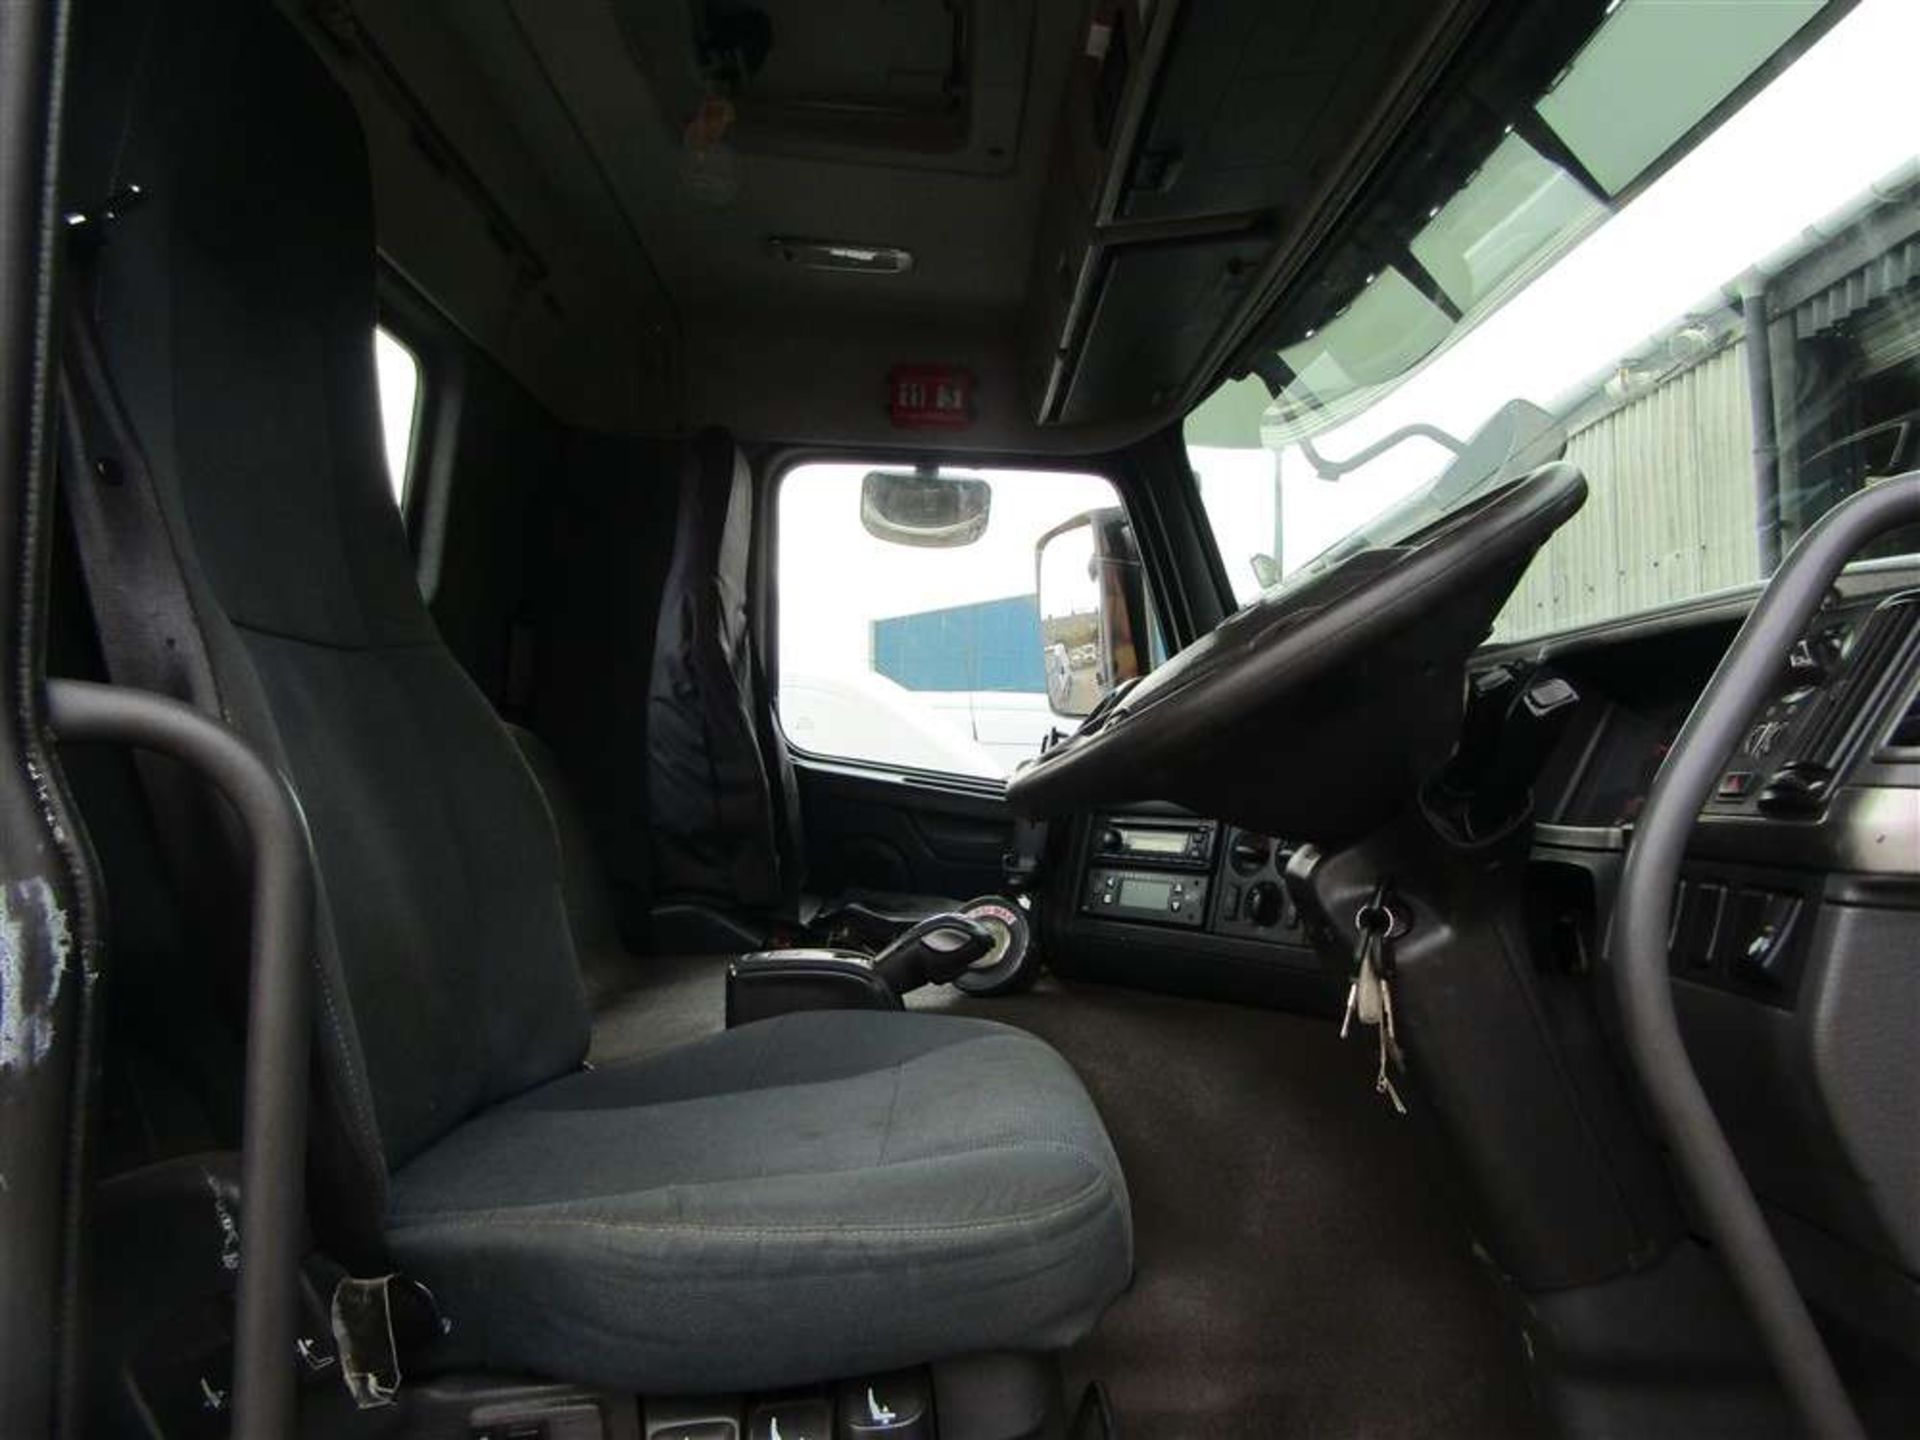 2014 14 reg Volvo FM 6 Wheel Chassis Cab (Direct United Utilities Water) - Bild 5 aus 7